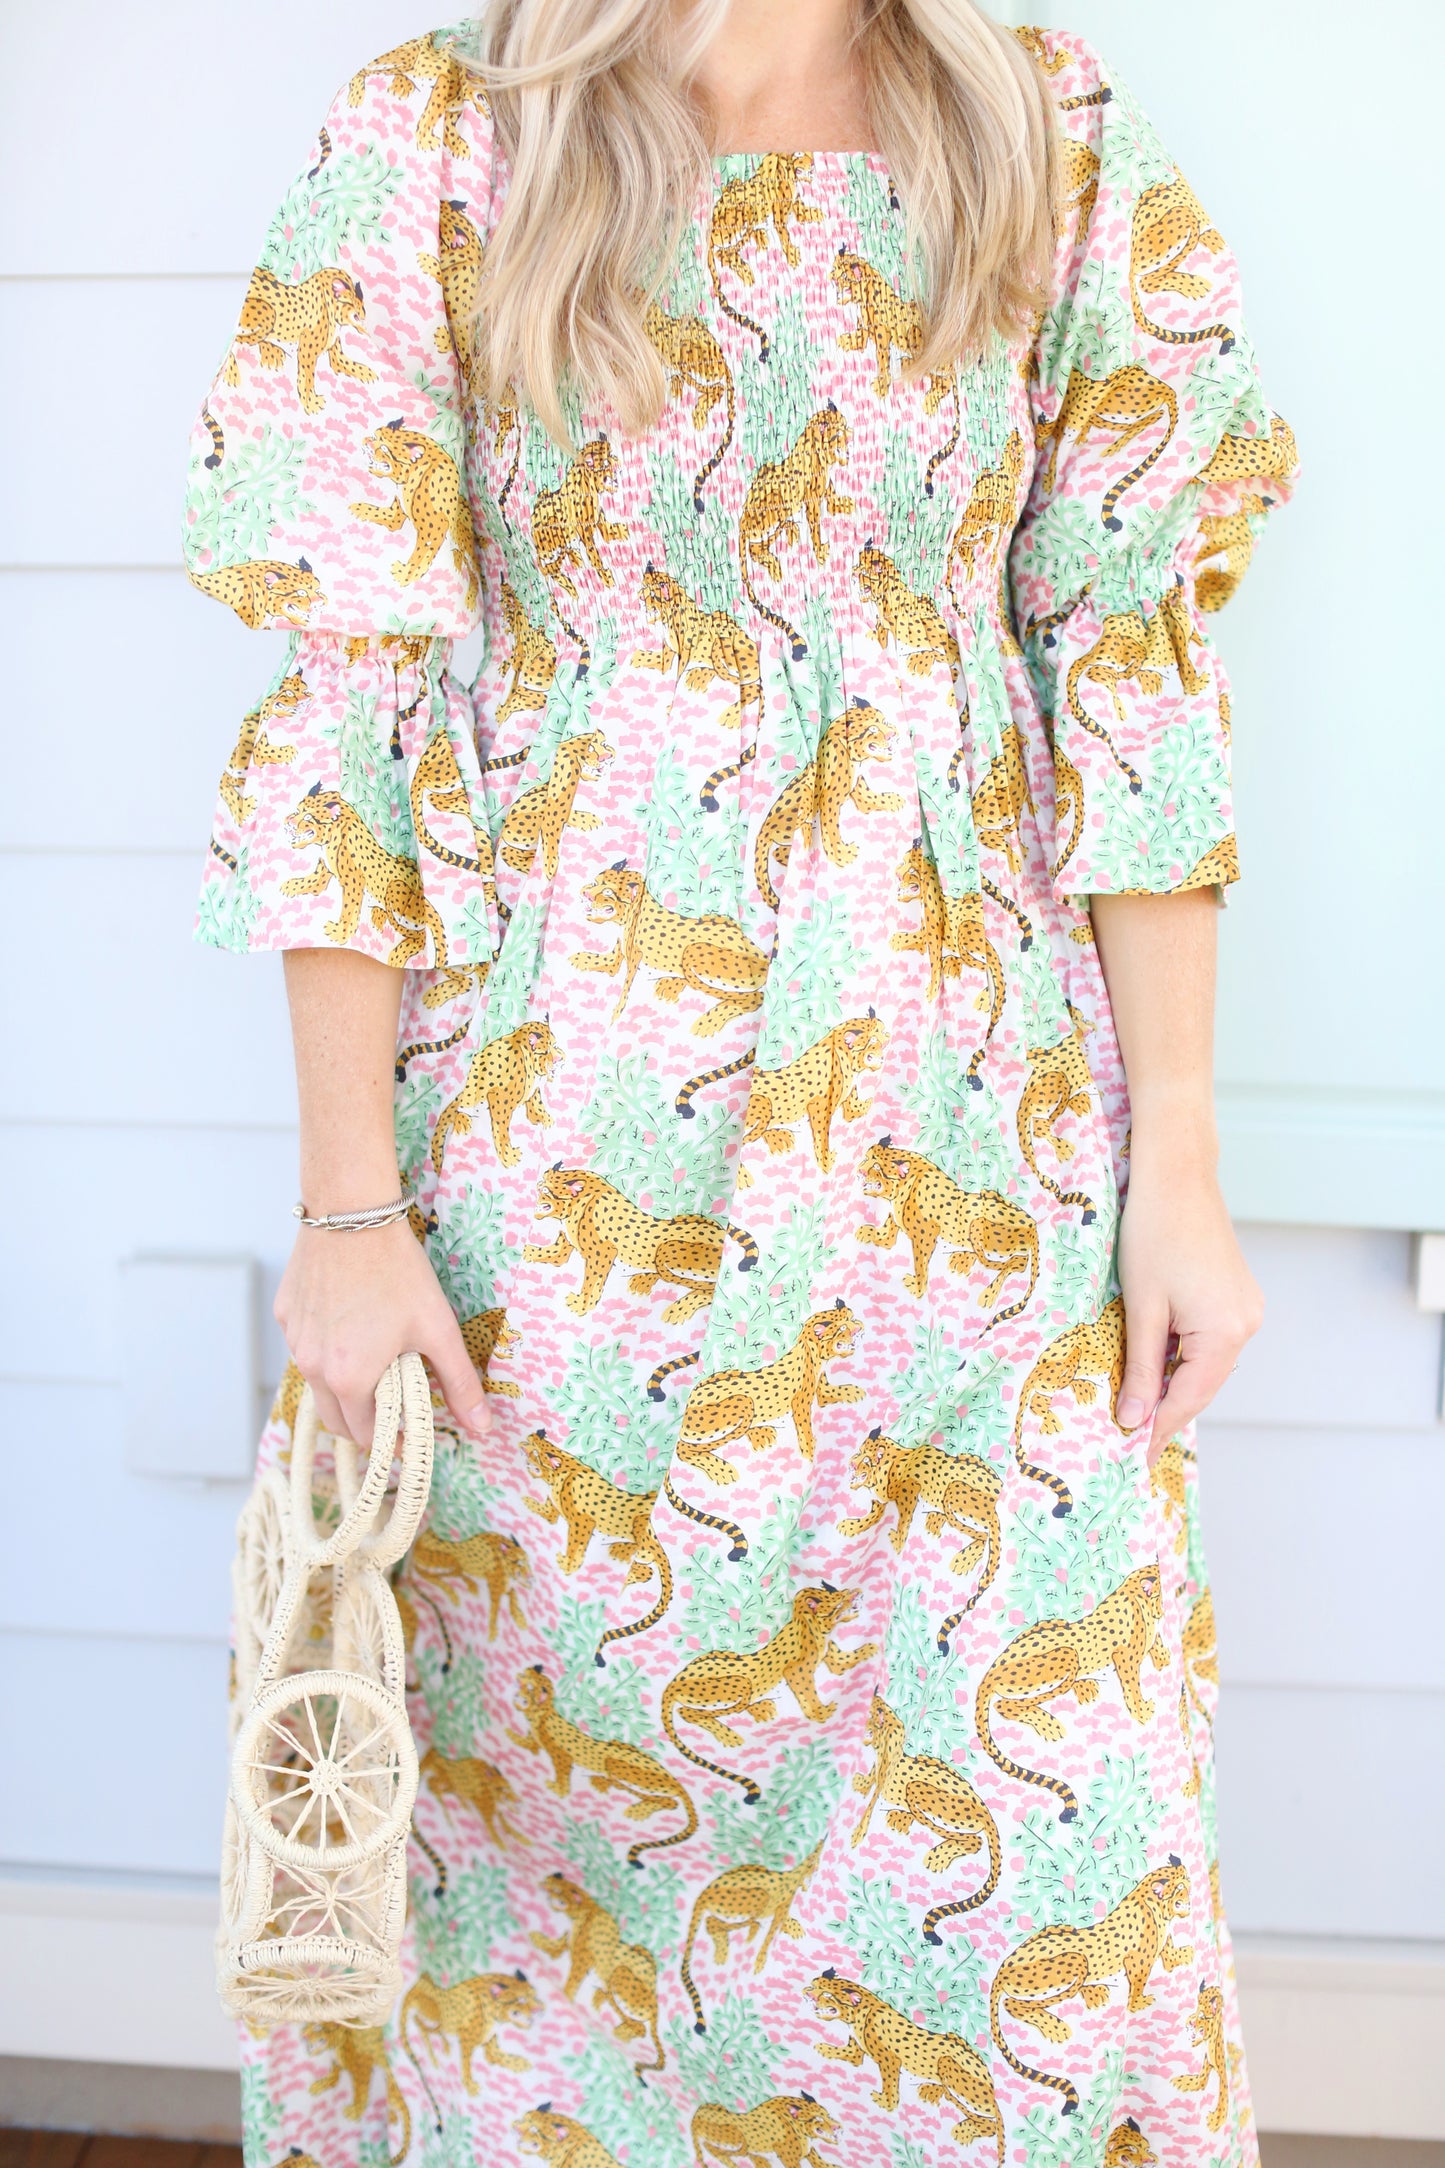 Safari Dress